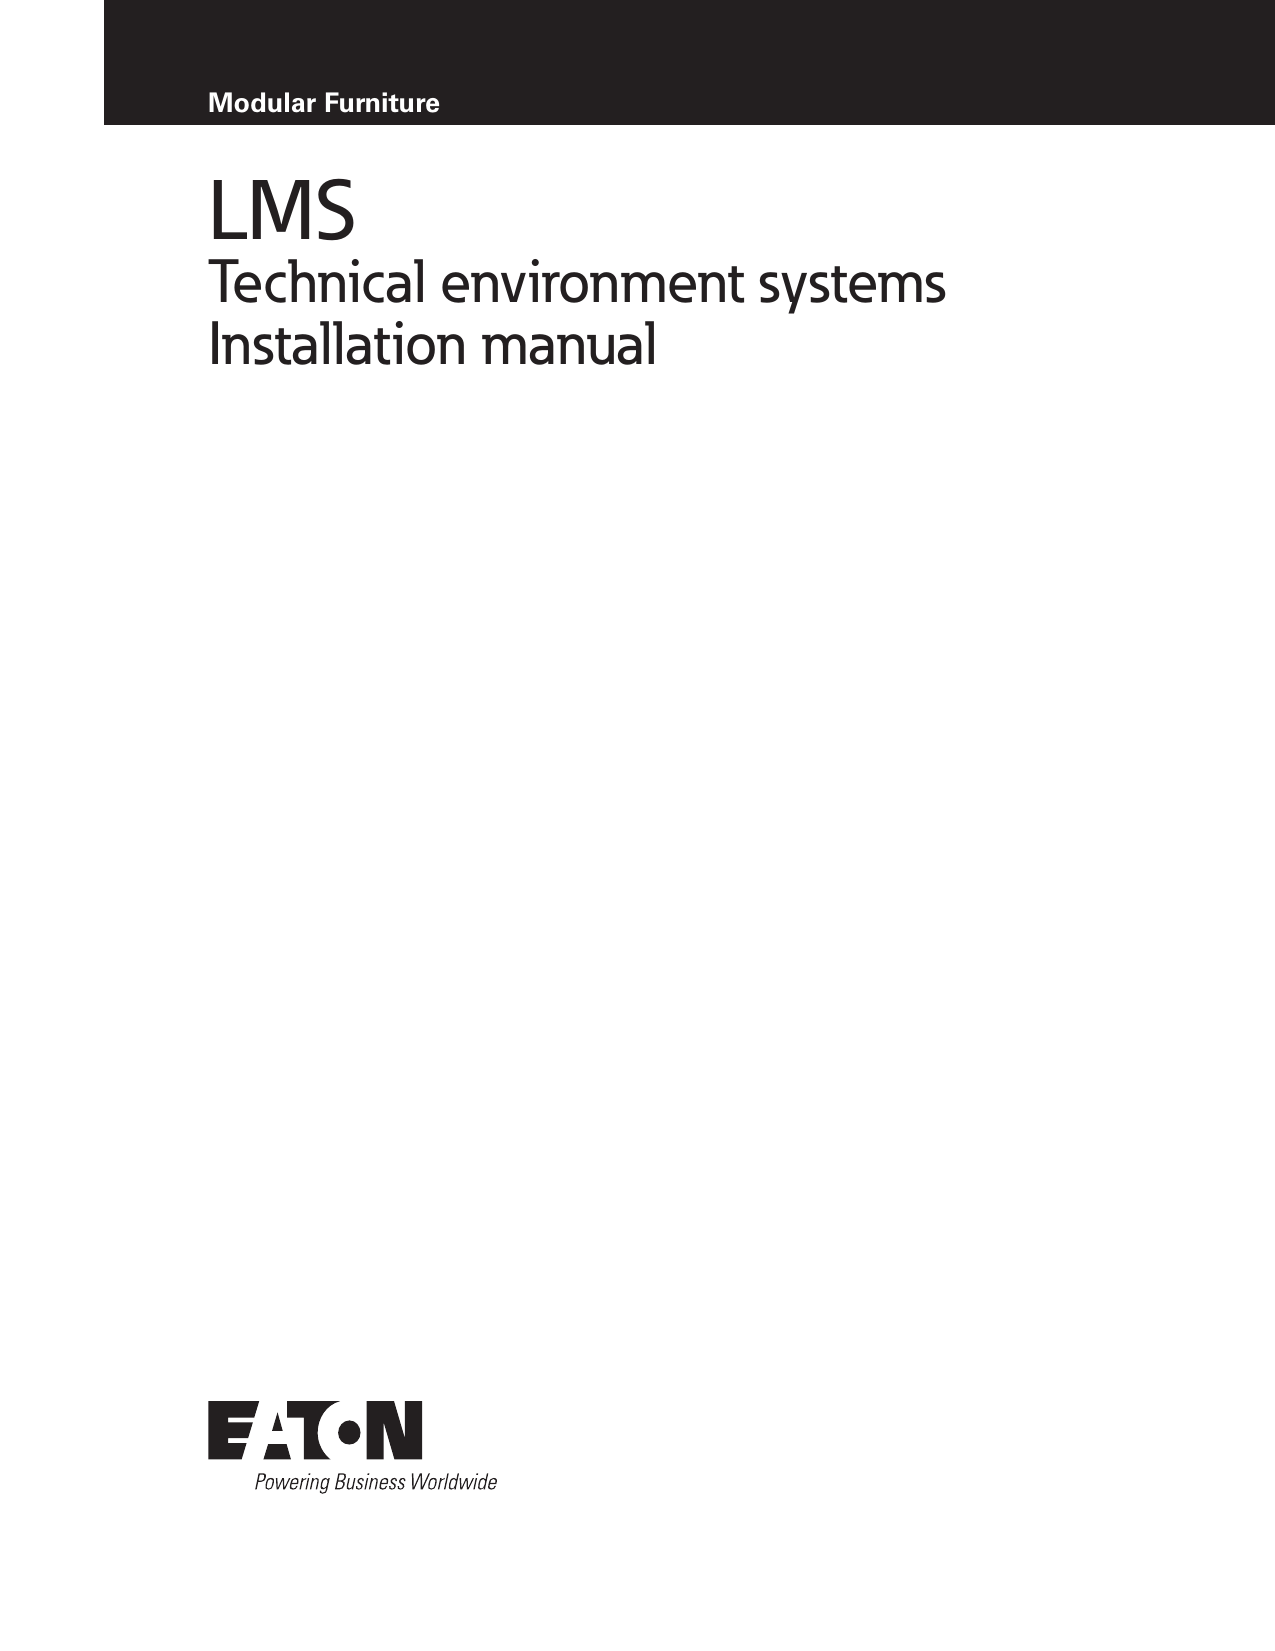 Eaton LMS Installation Manual